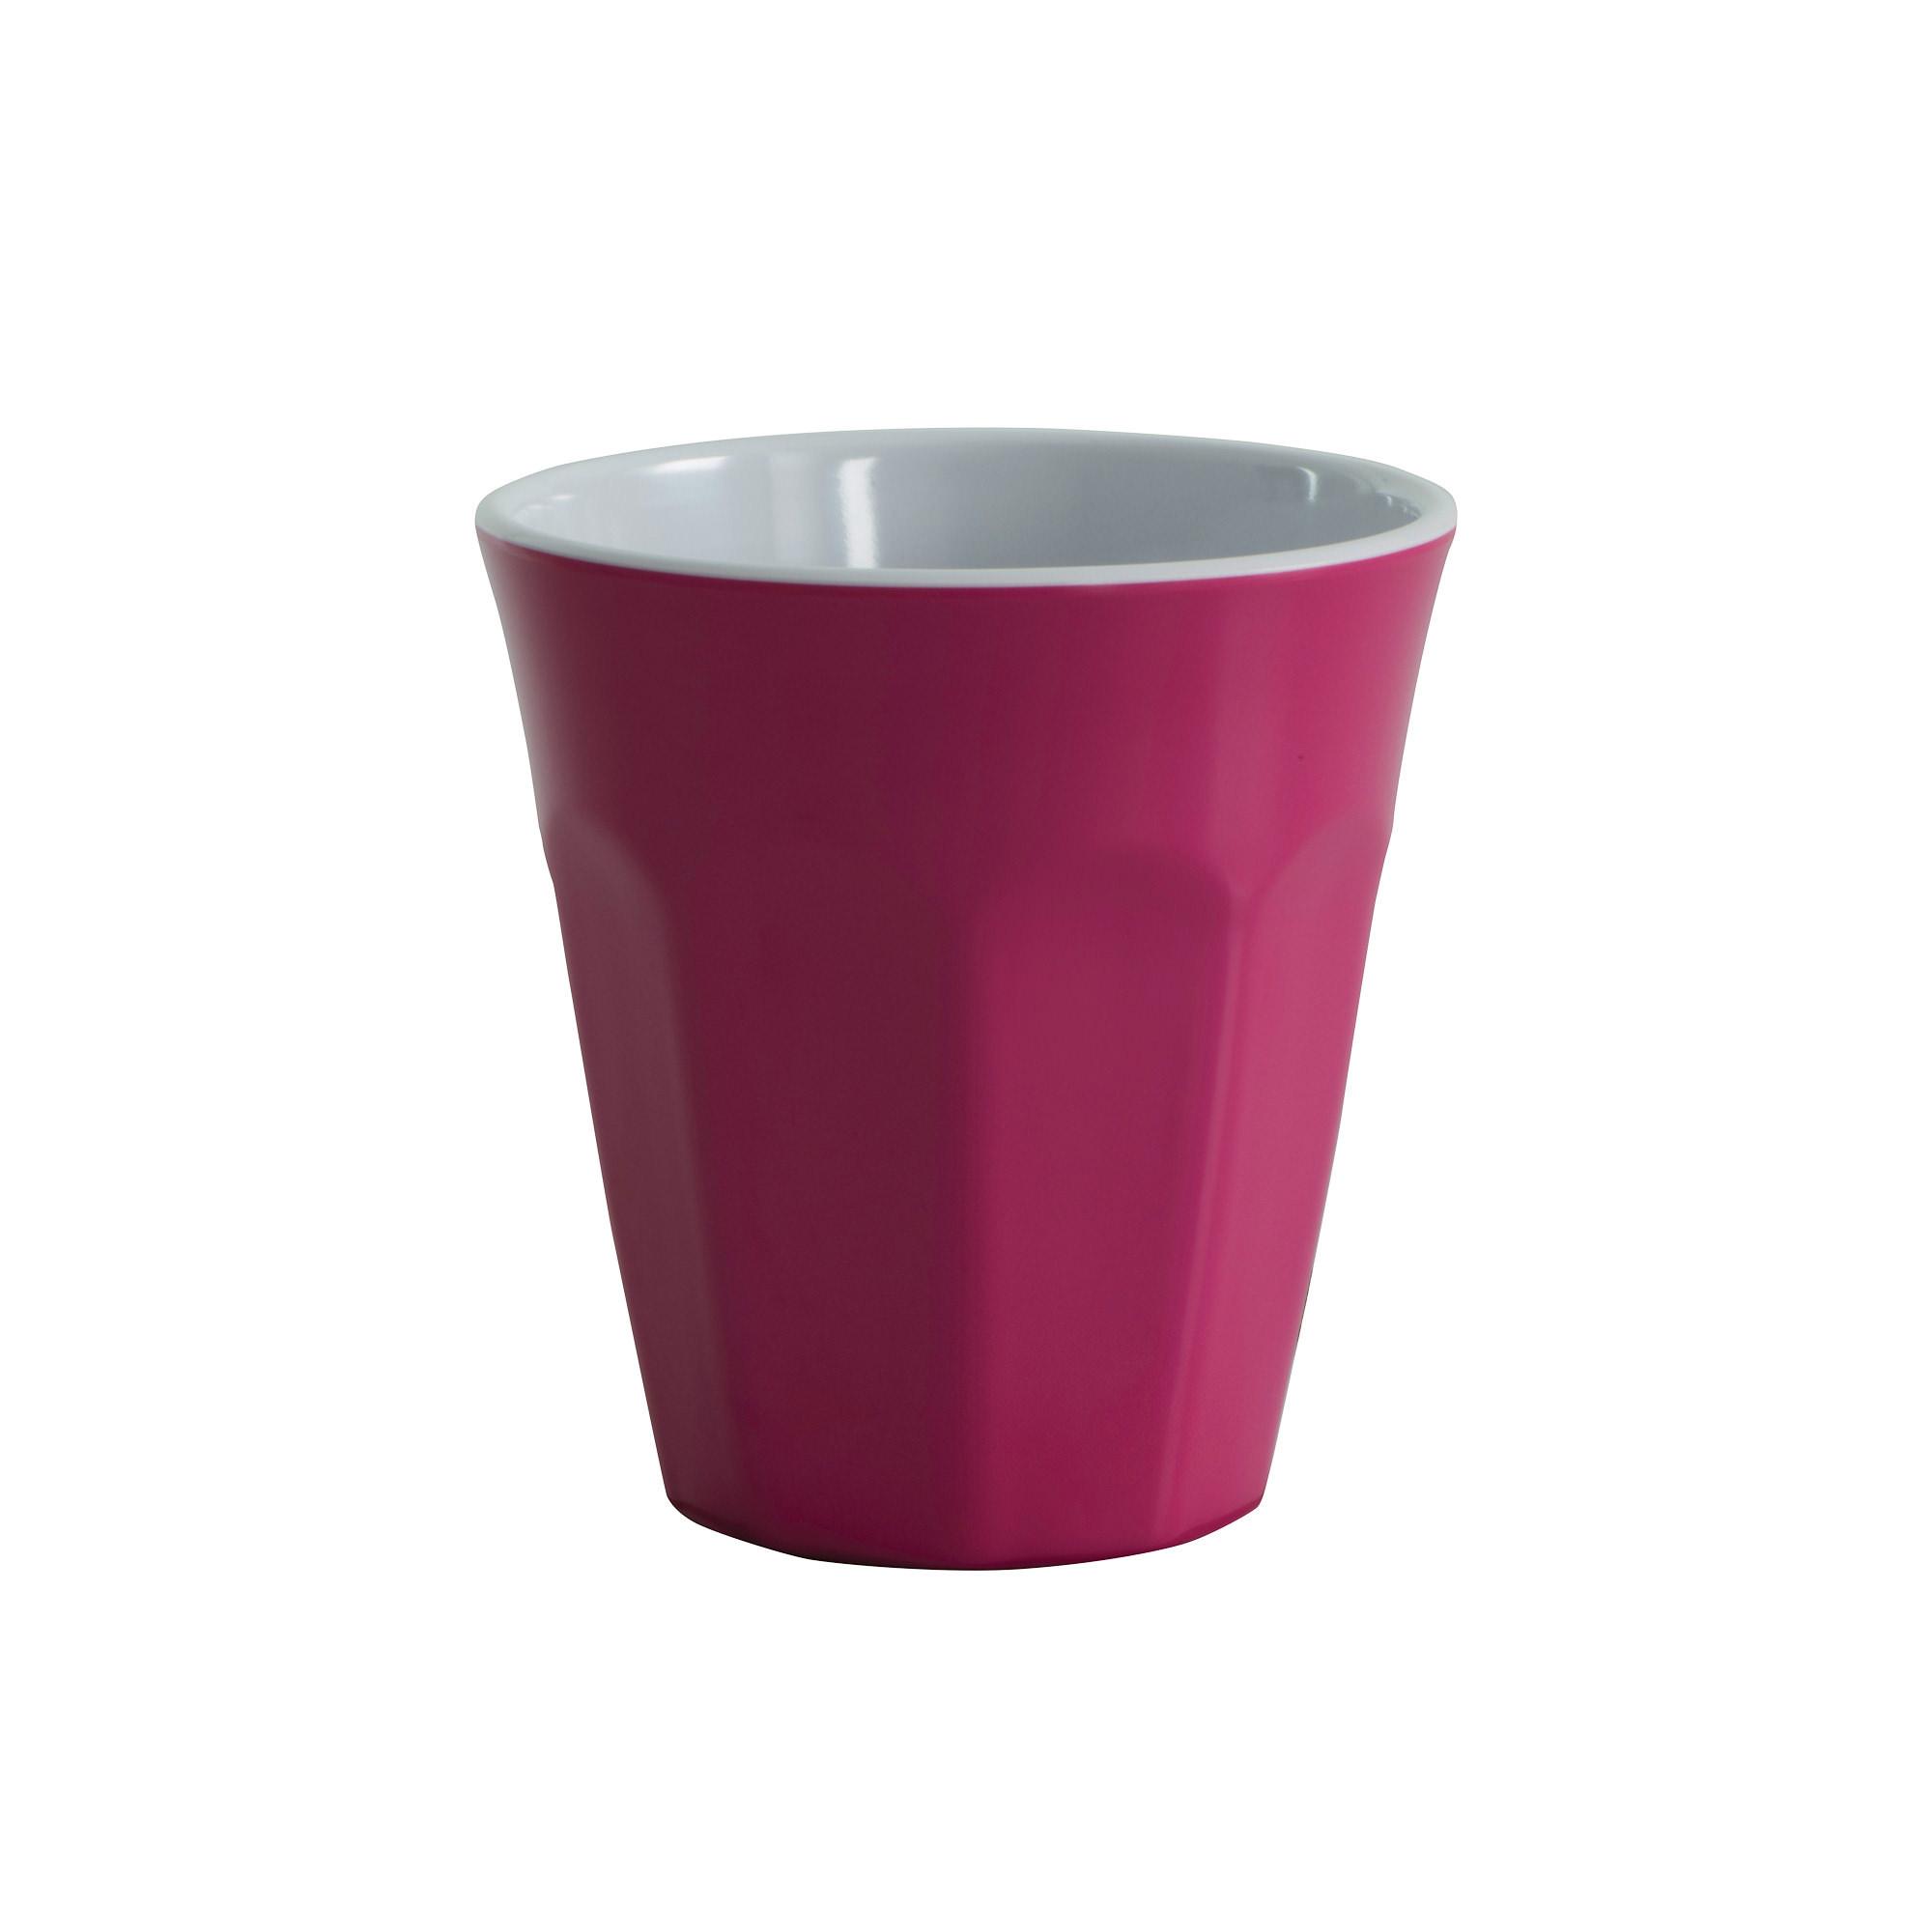 Serroni Melamine Cup 275ml Fuchsia Pink Image 1